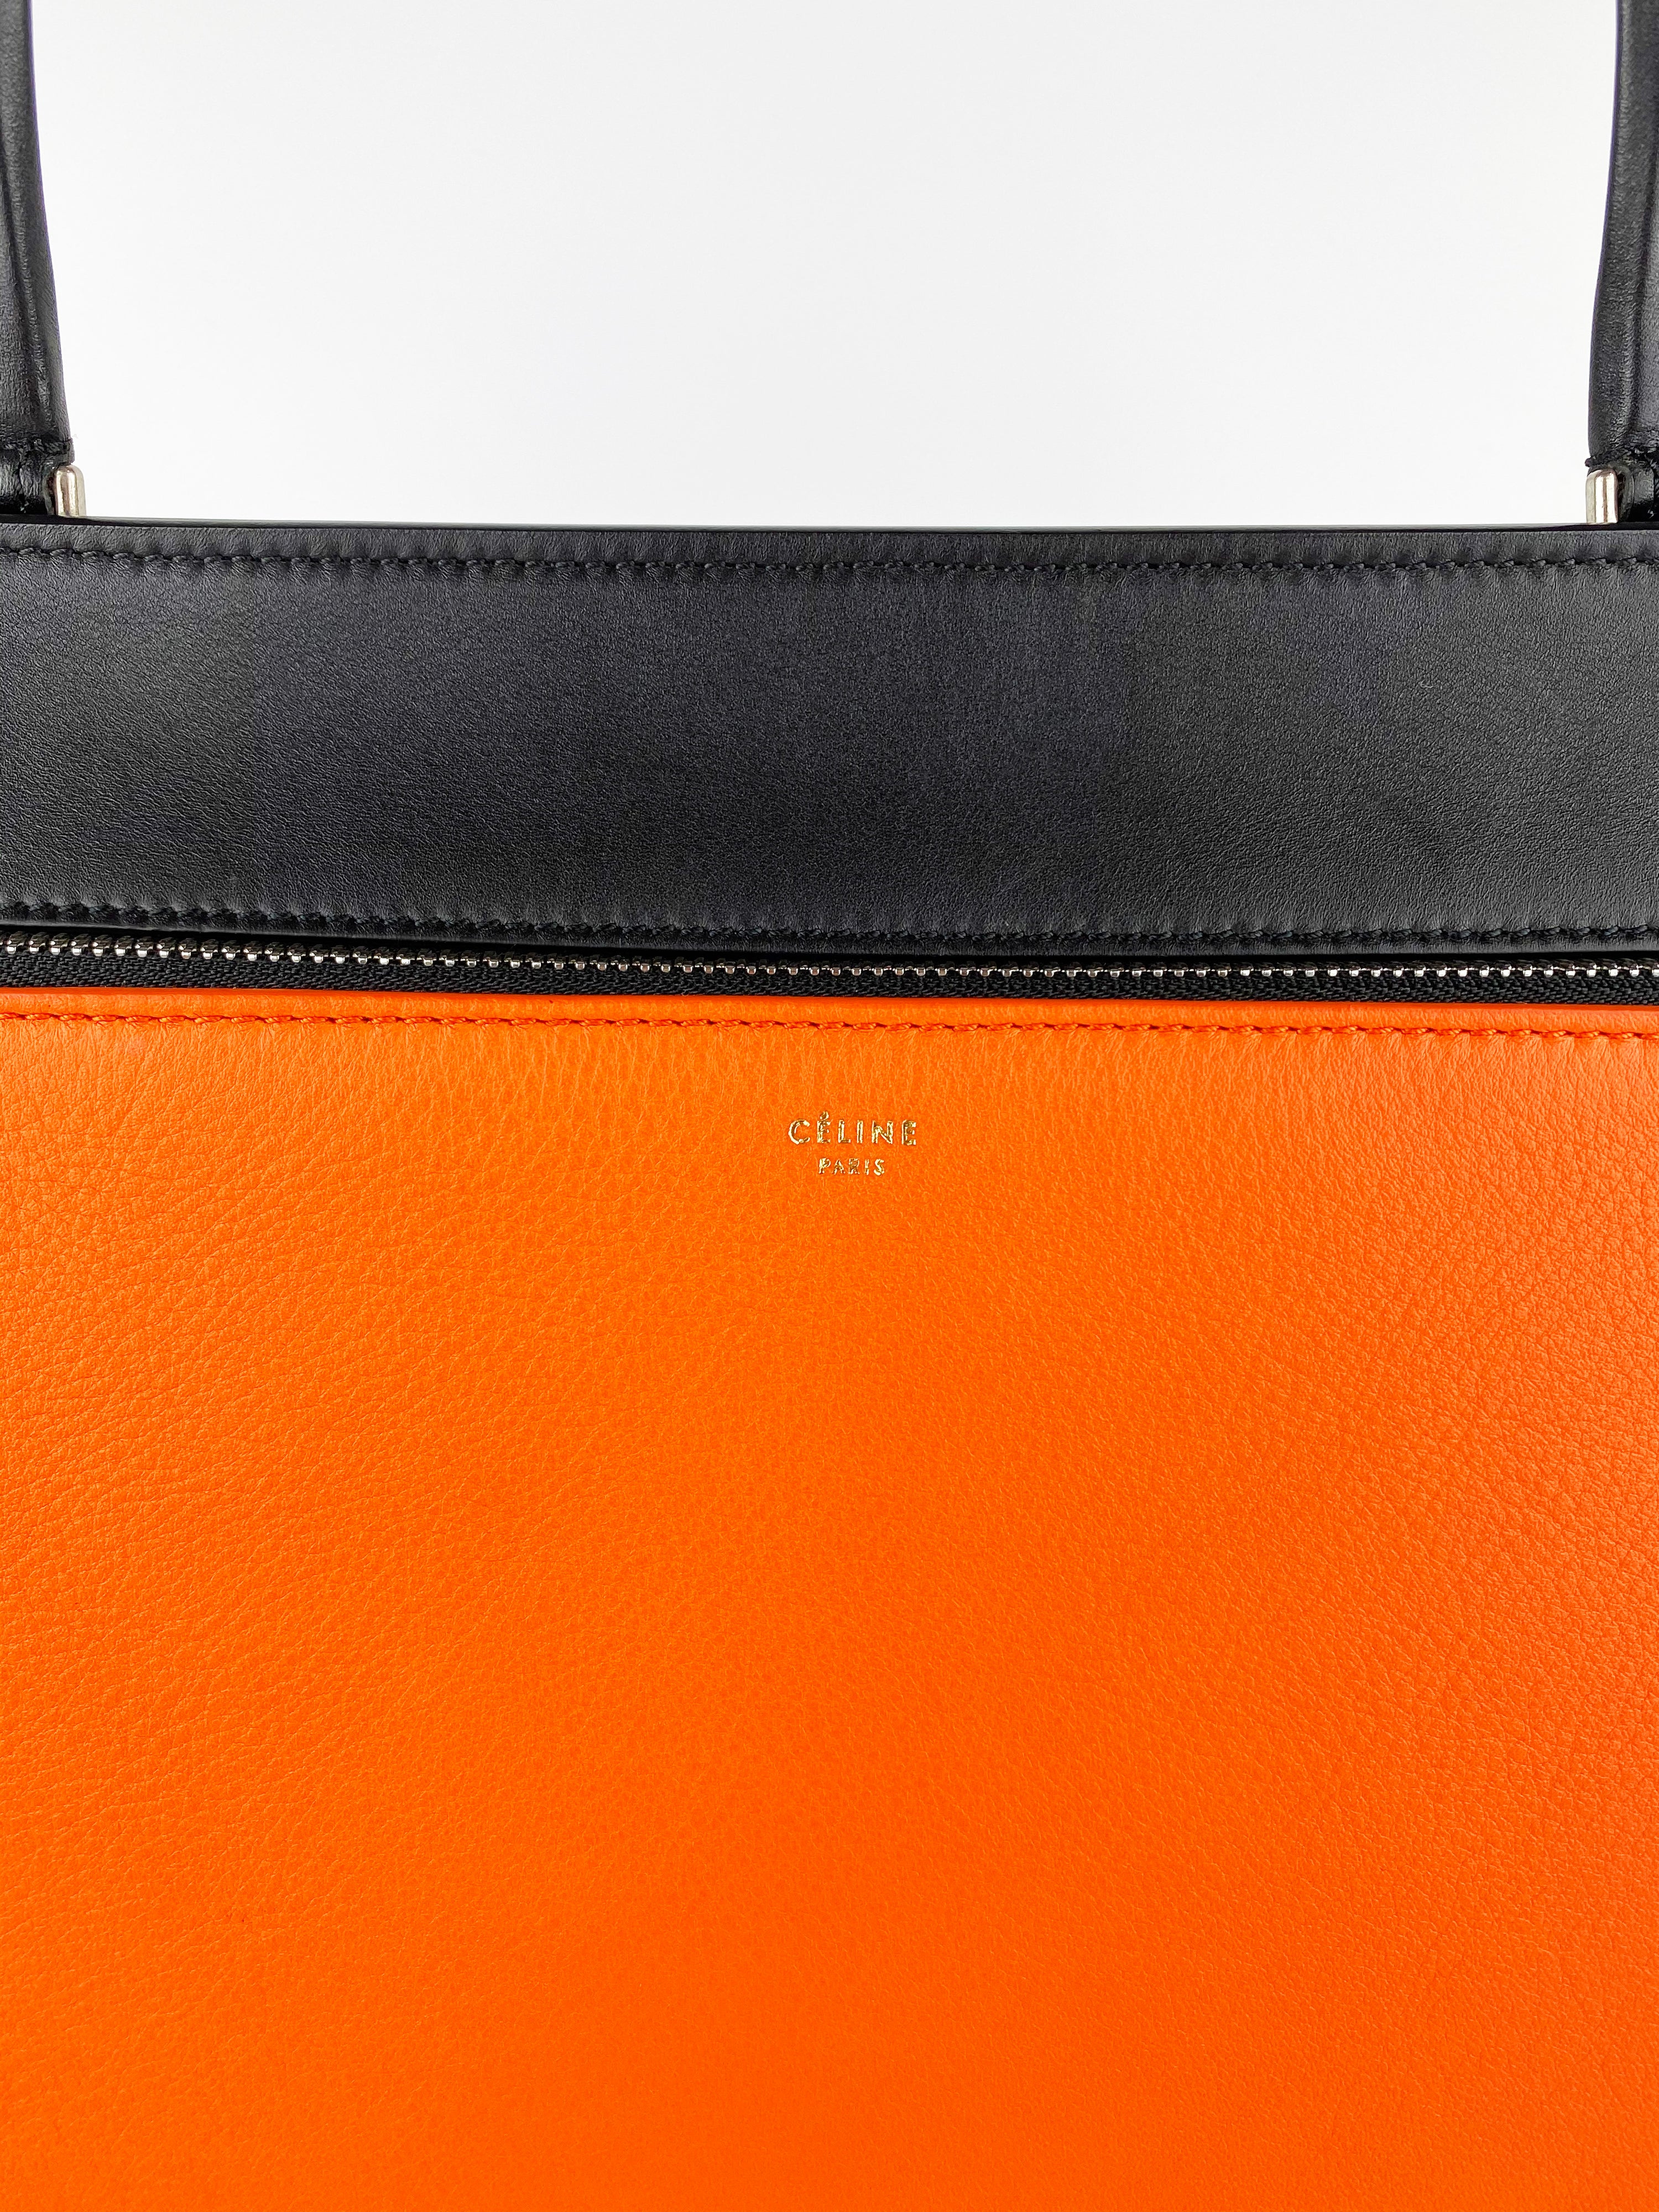 Celine Orange/Black Edge Bag